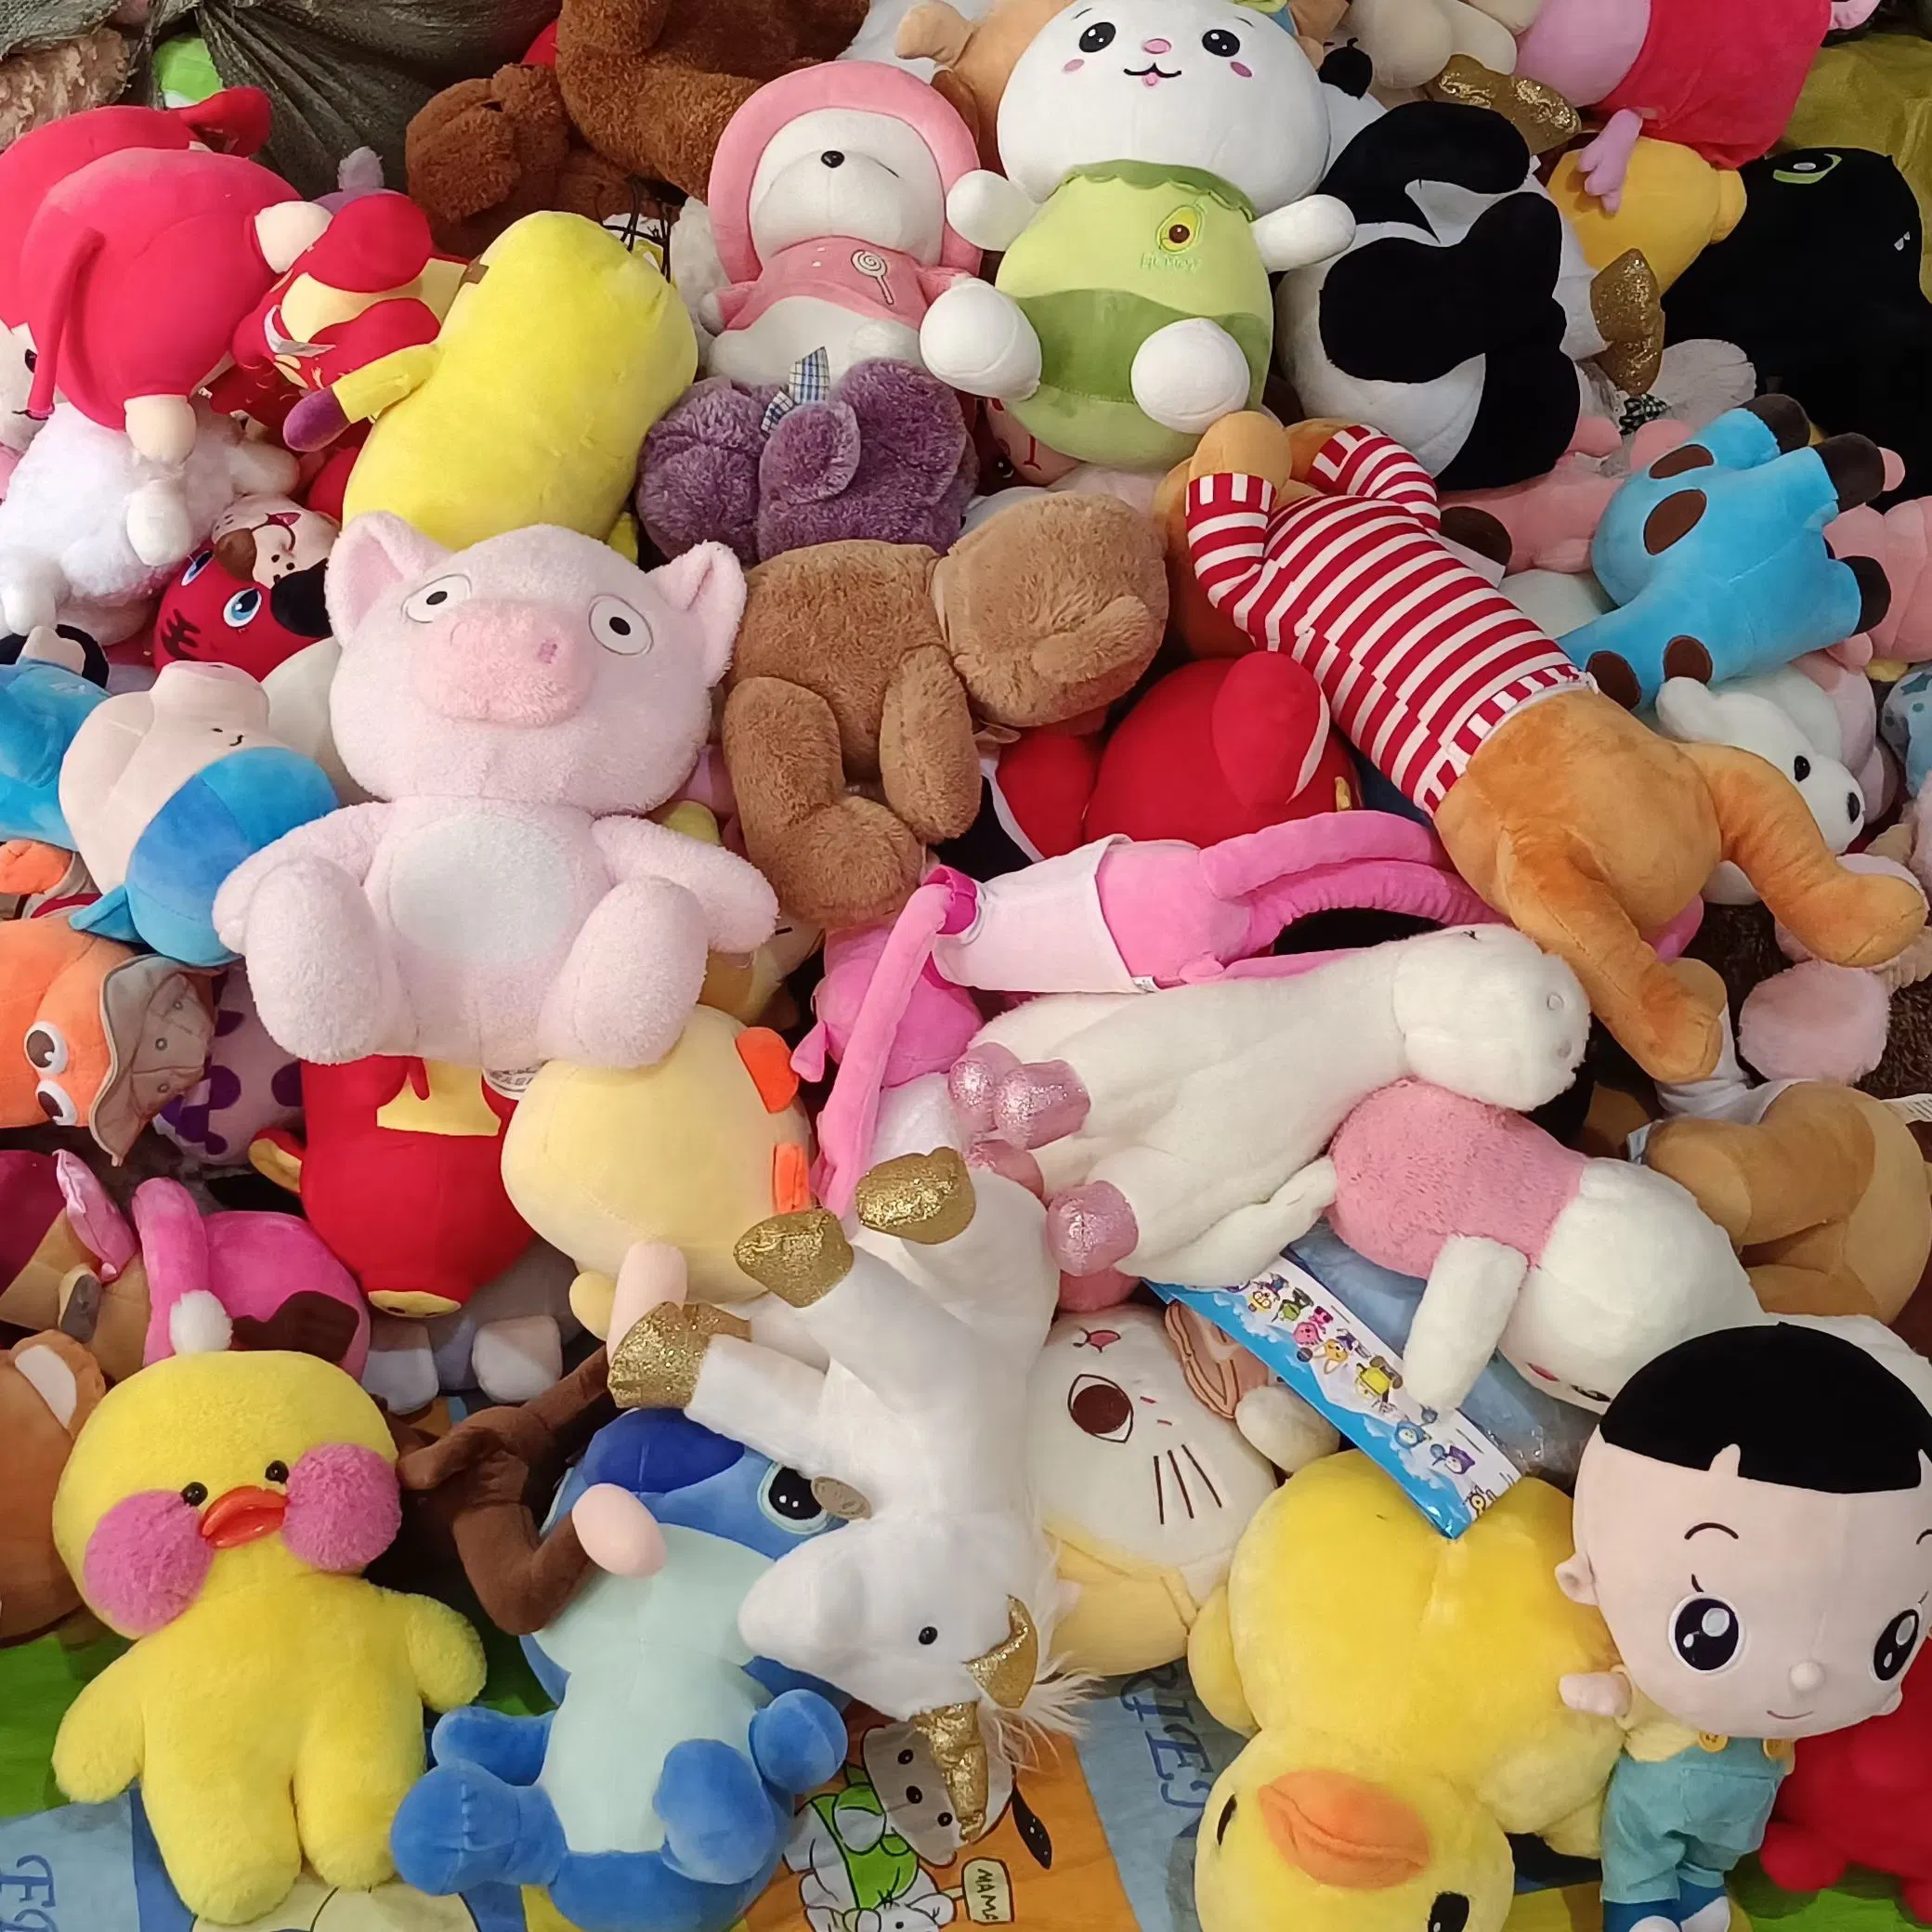 Juguete de peluche en Stock Toys vendidos por Kg varios Cartoon Juguetes de animales tirar almohadas